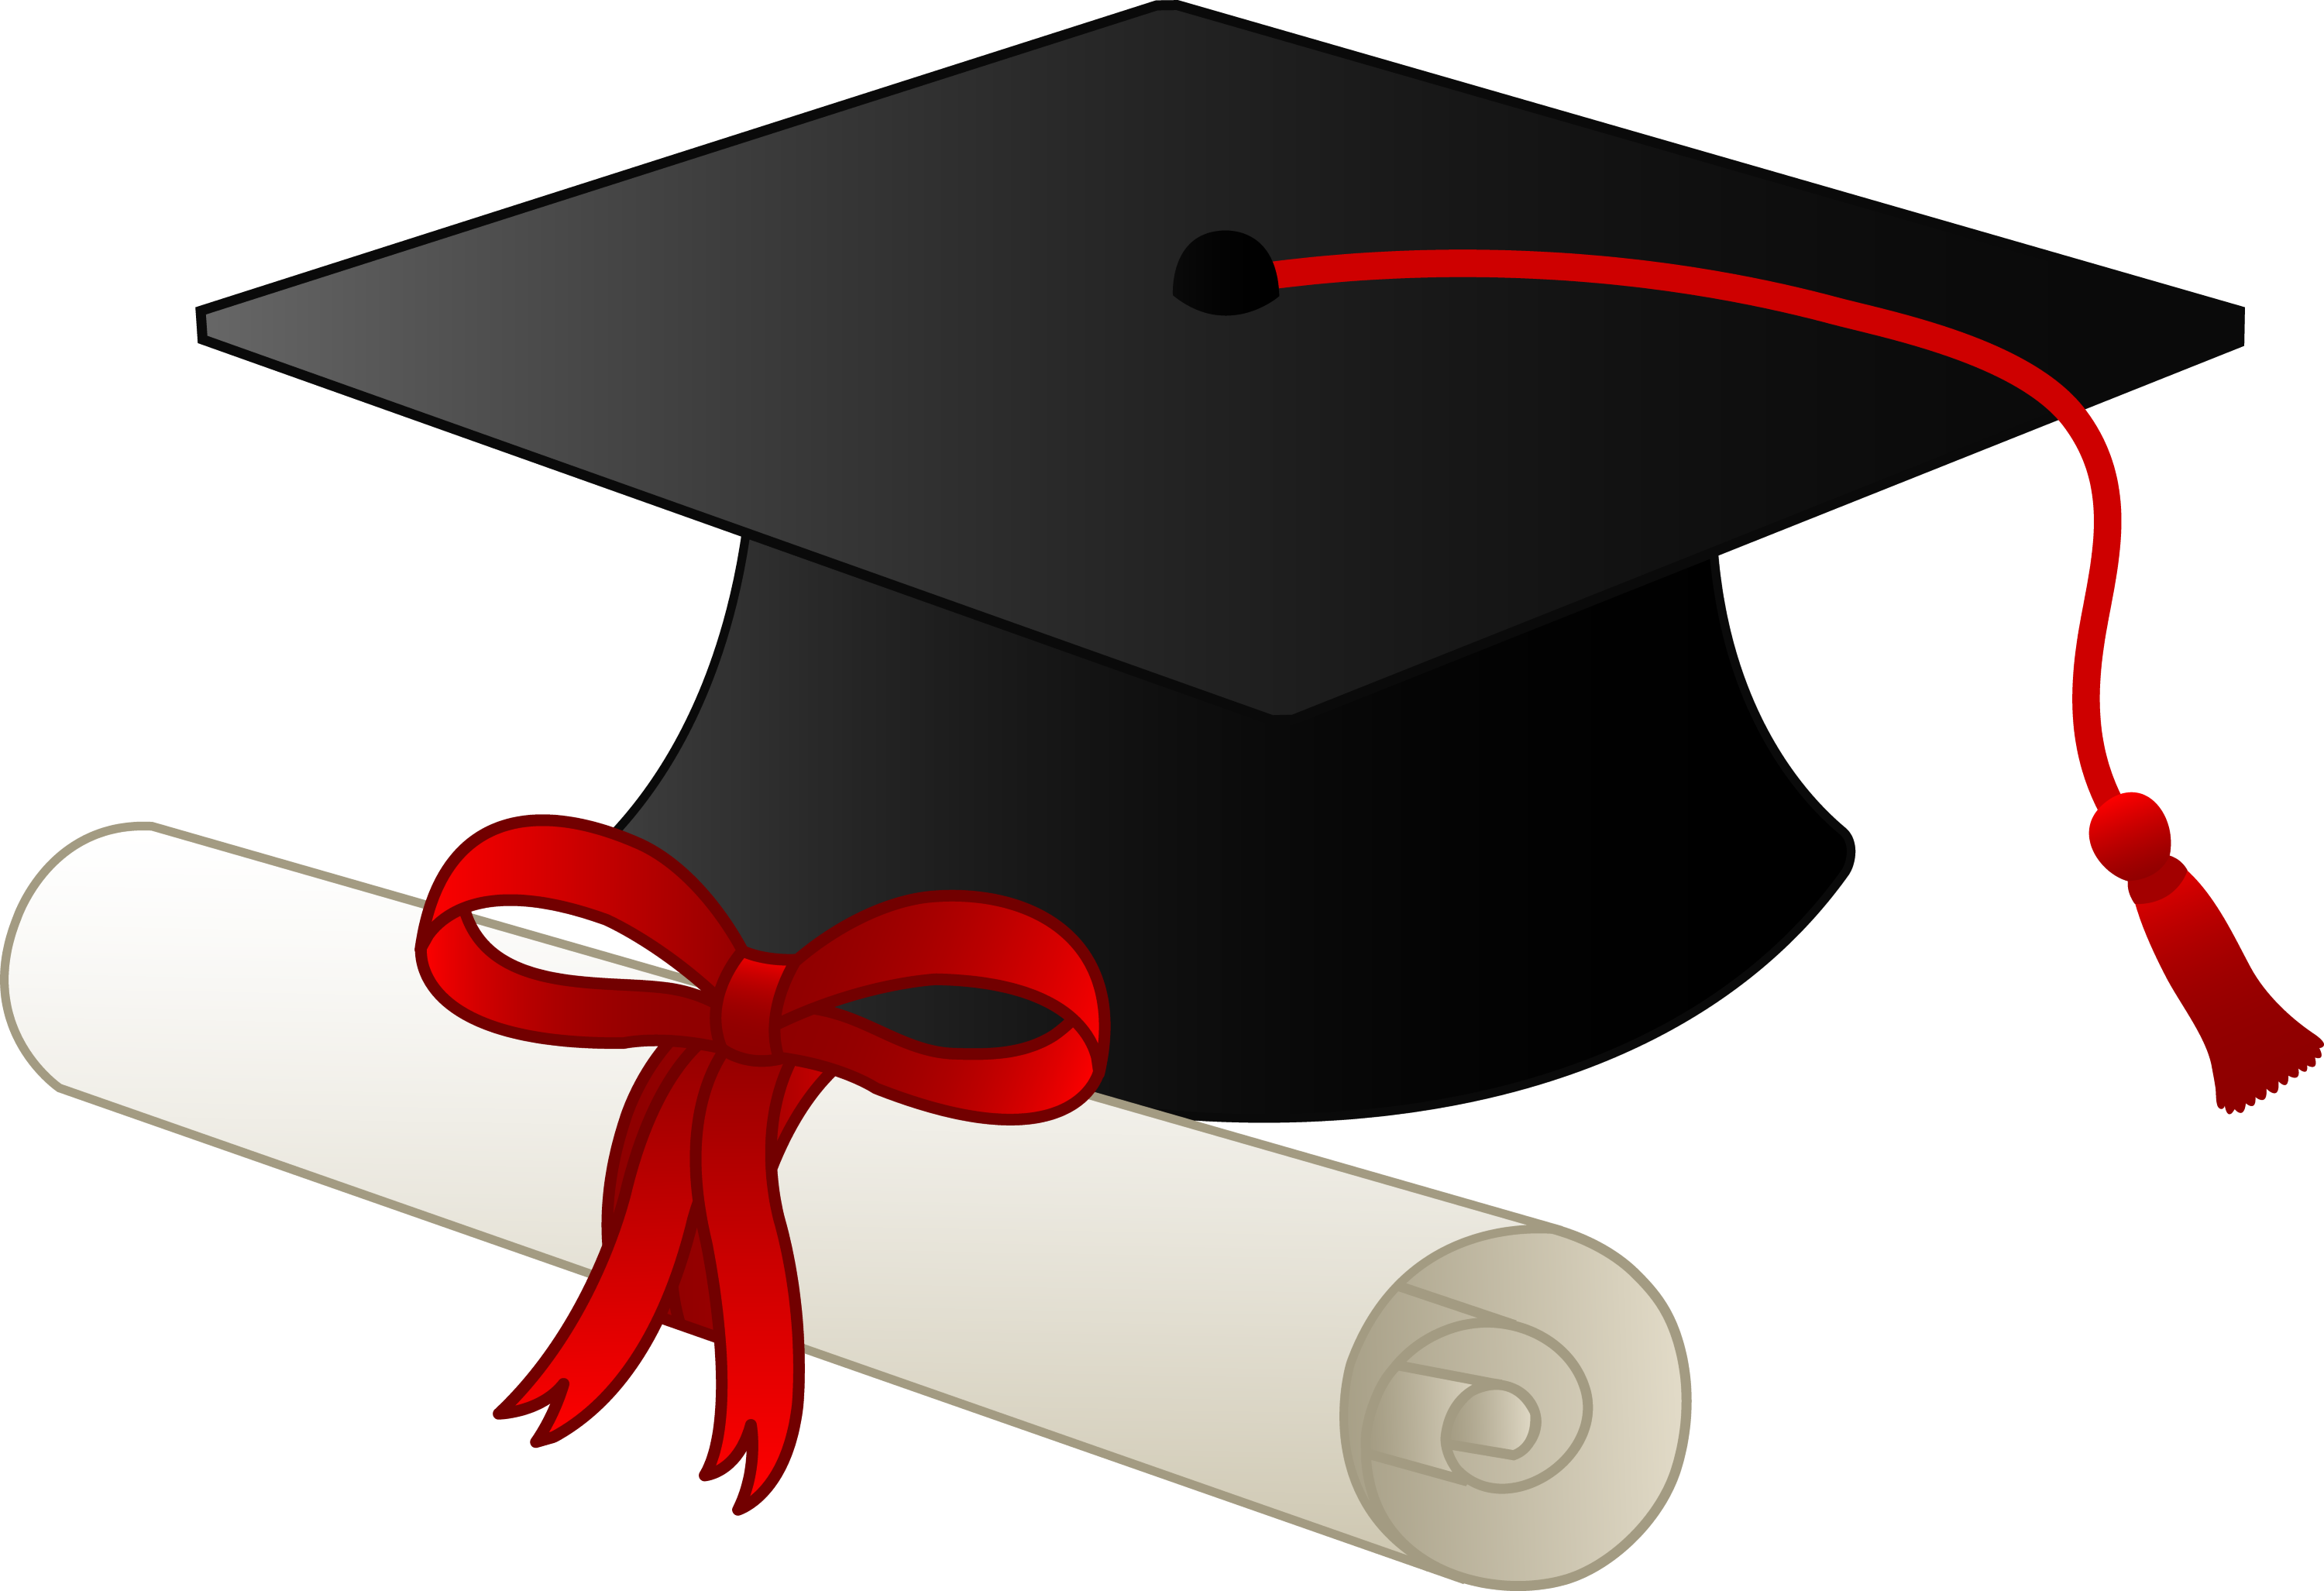 free clipart graduation cap and diploma - photo #1